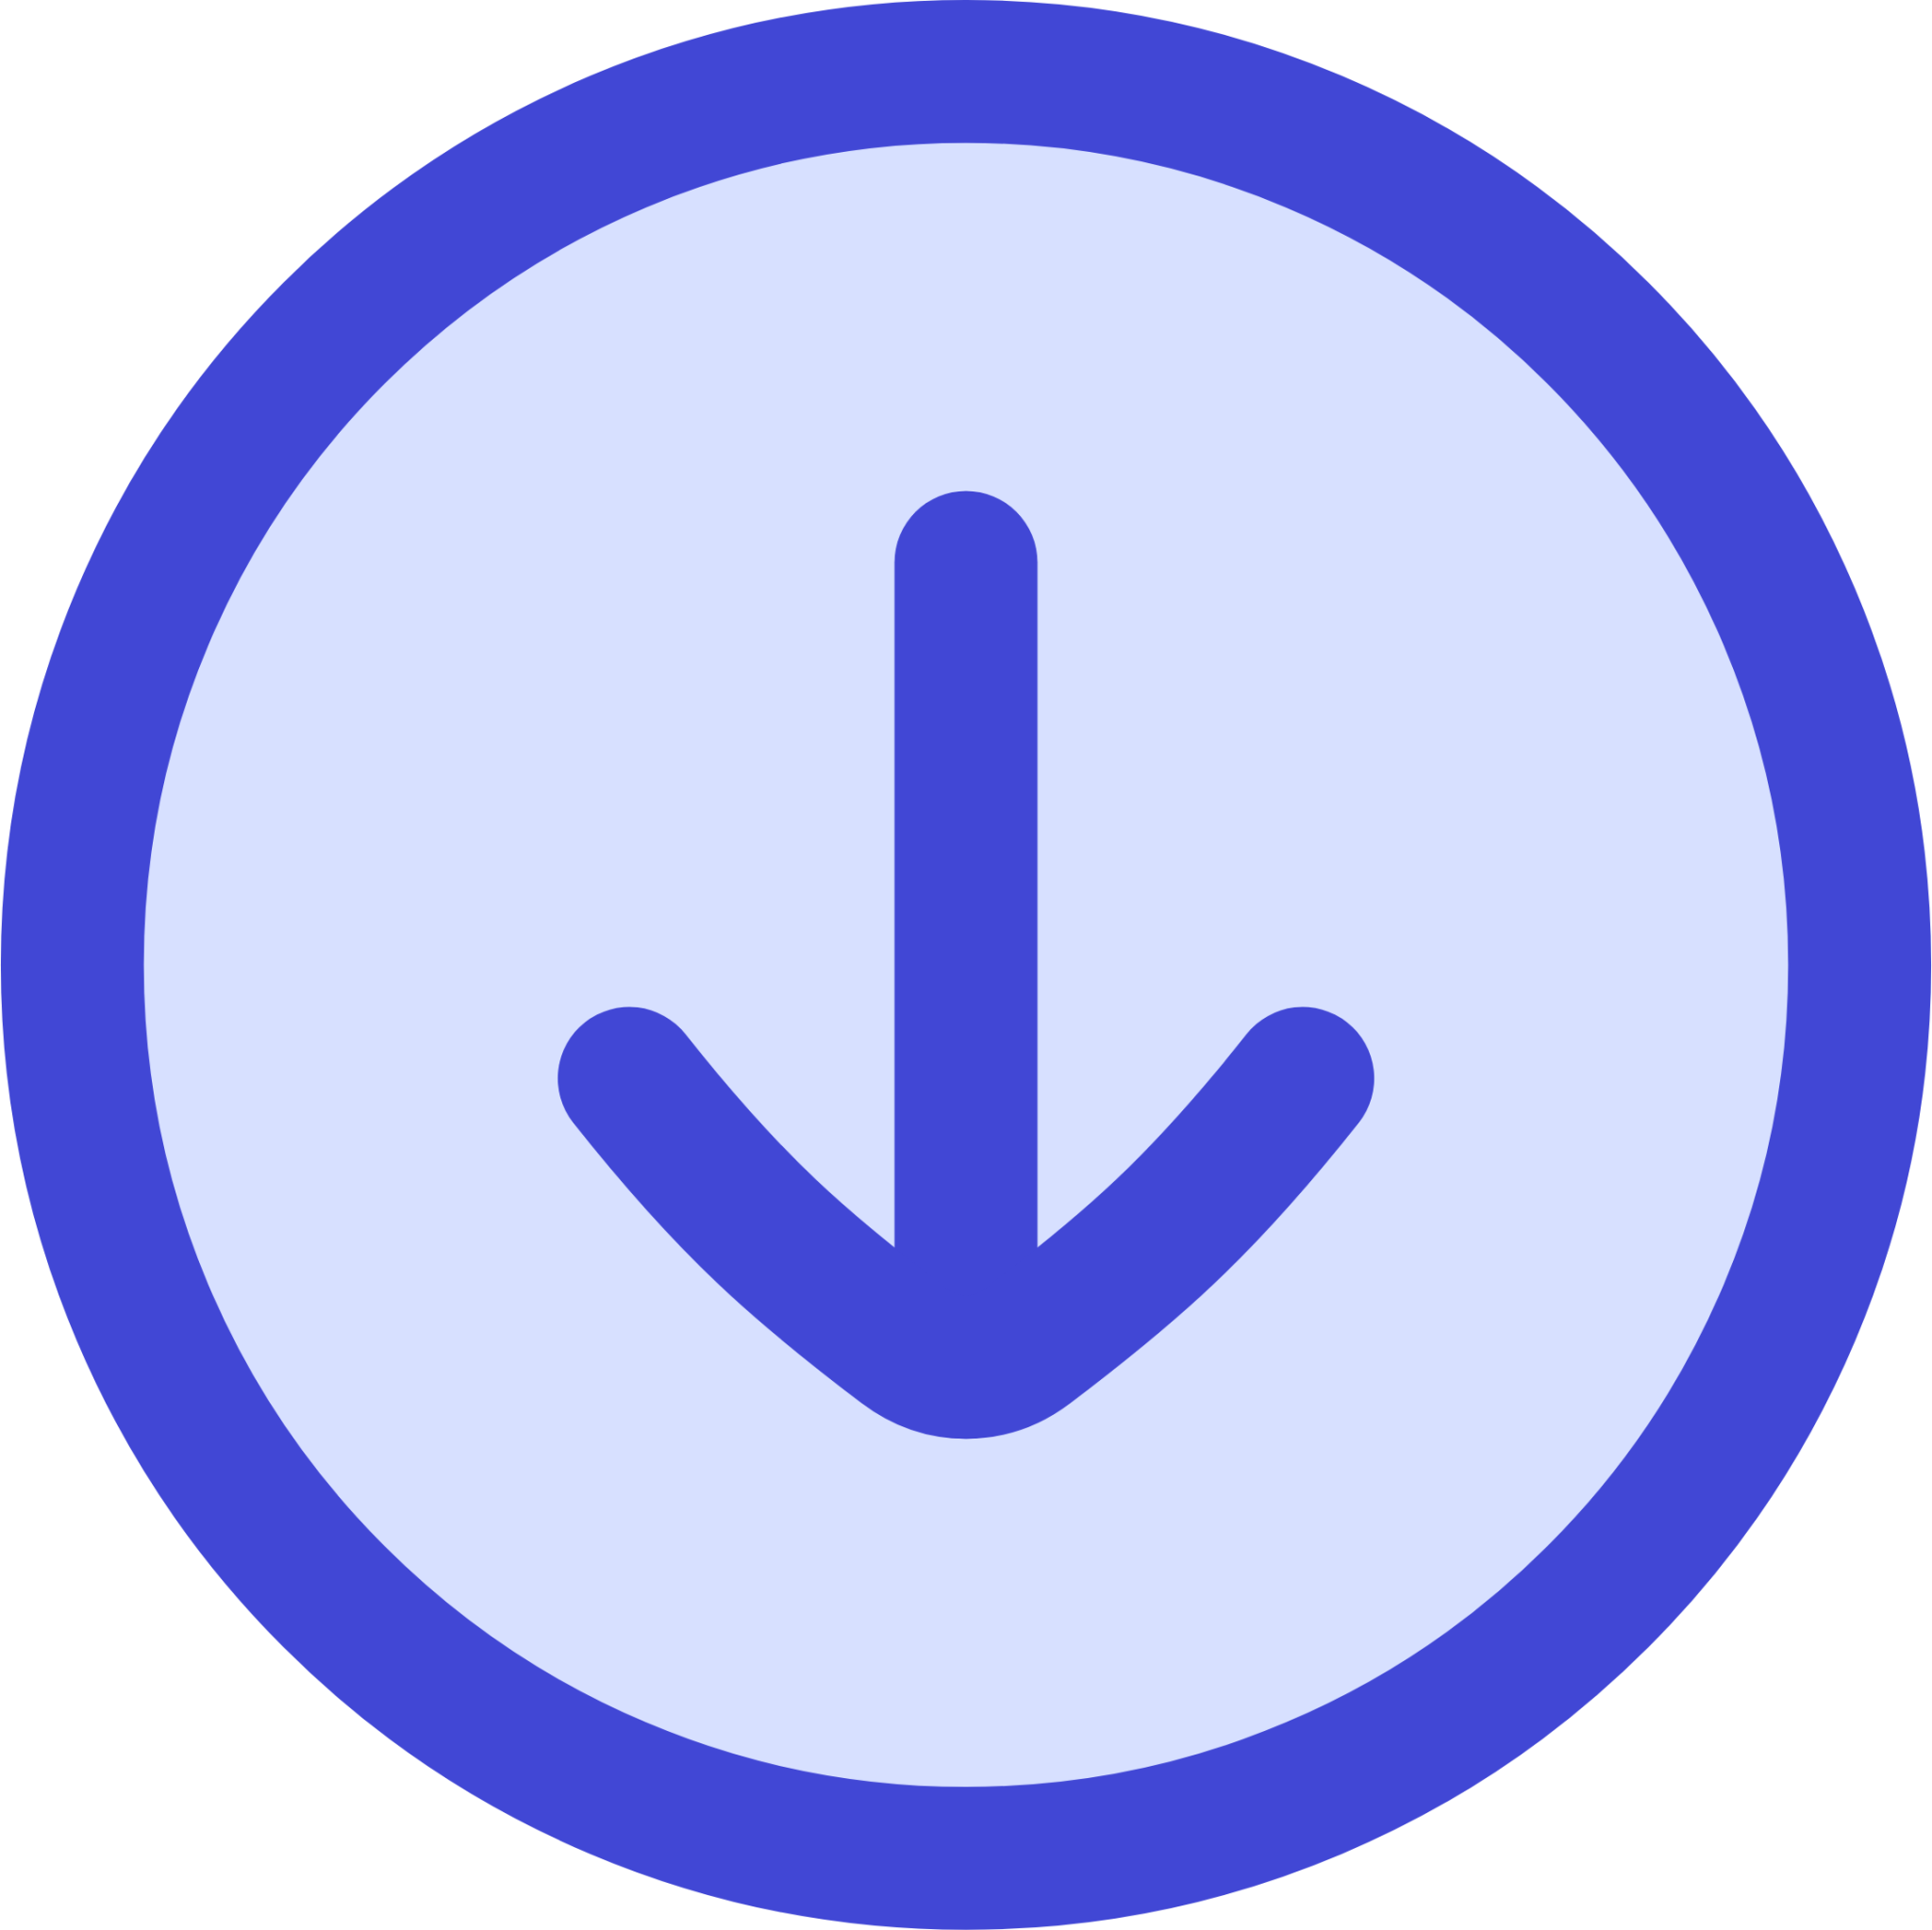 download circle icon